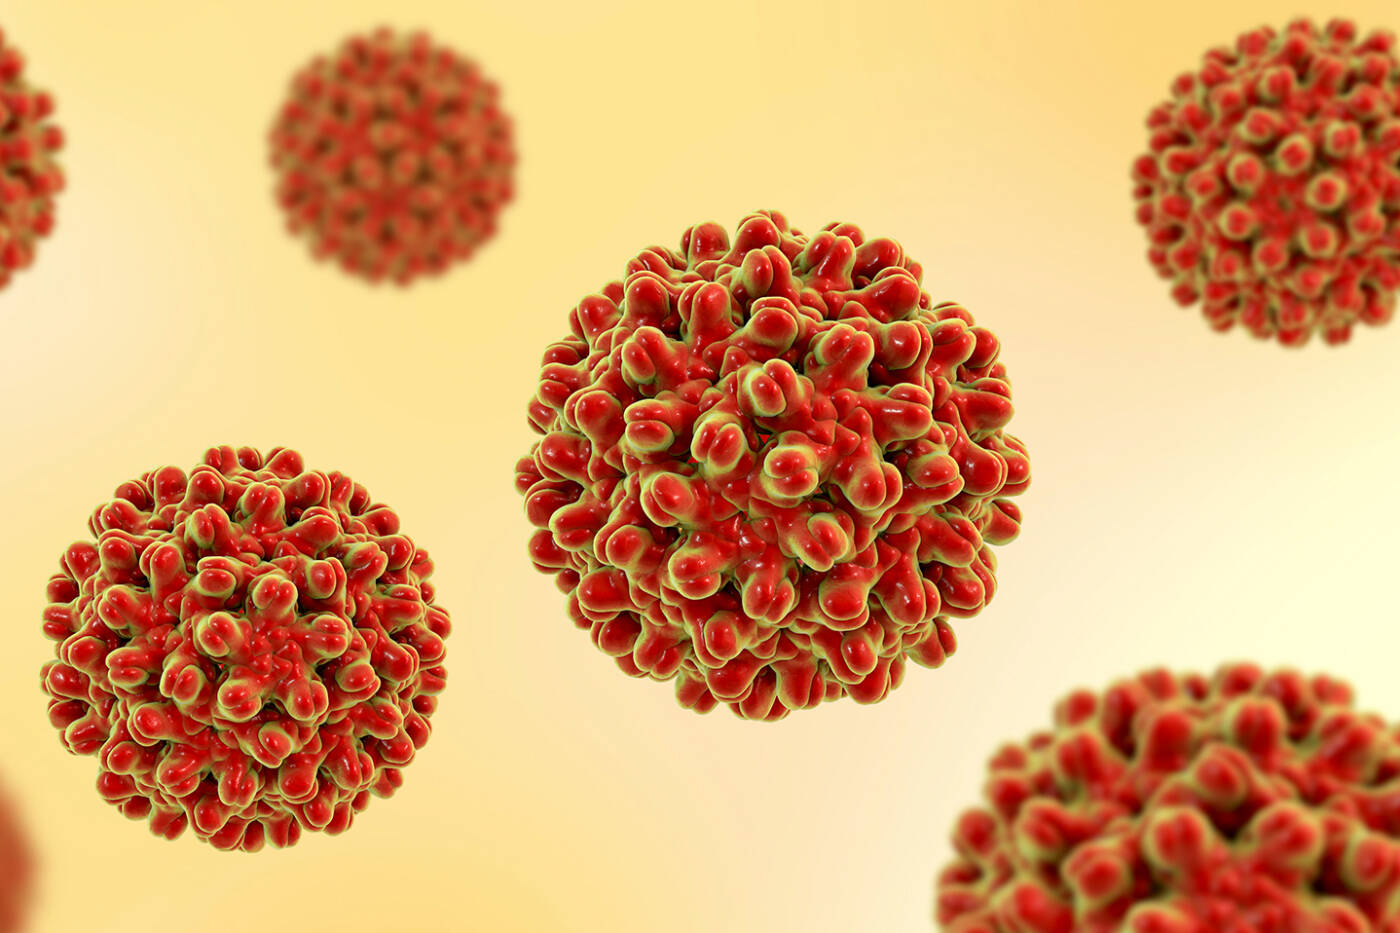 3D illustration of Hepatitis B virions